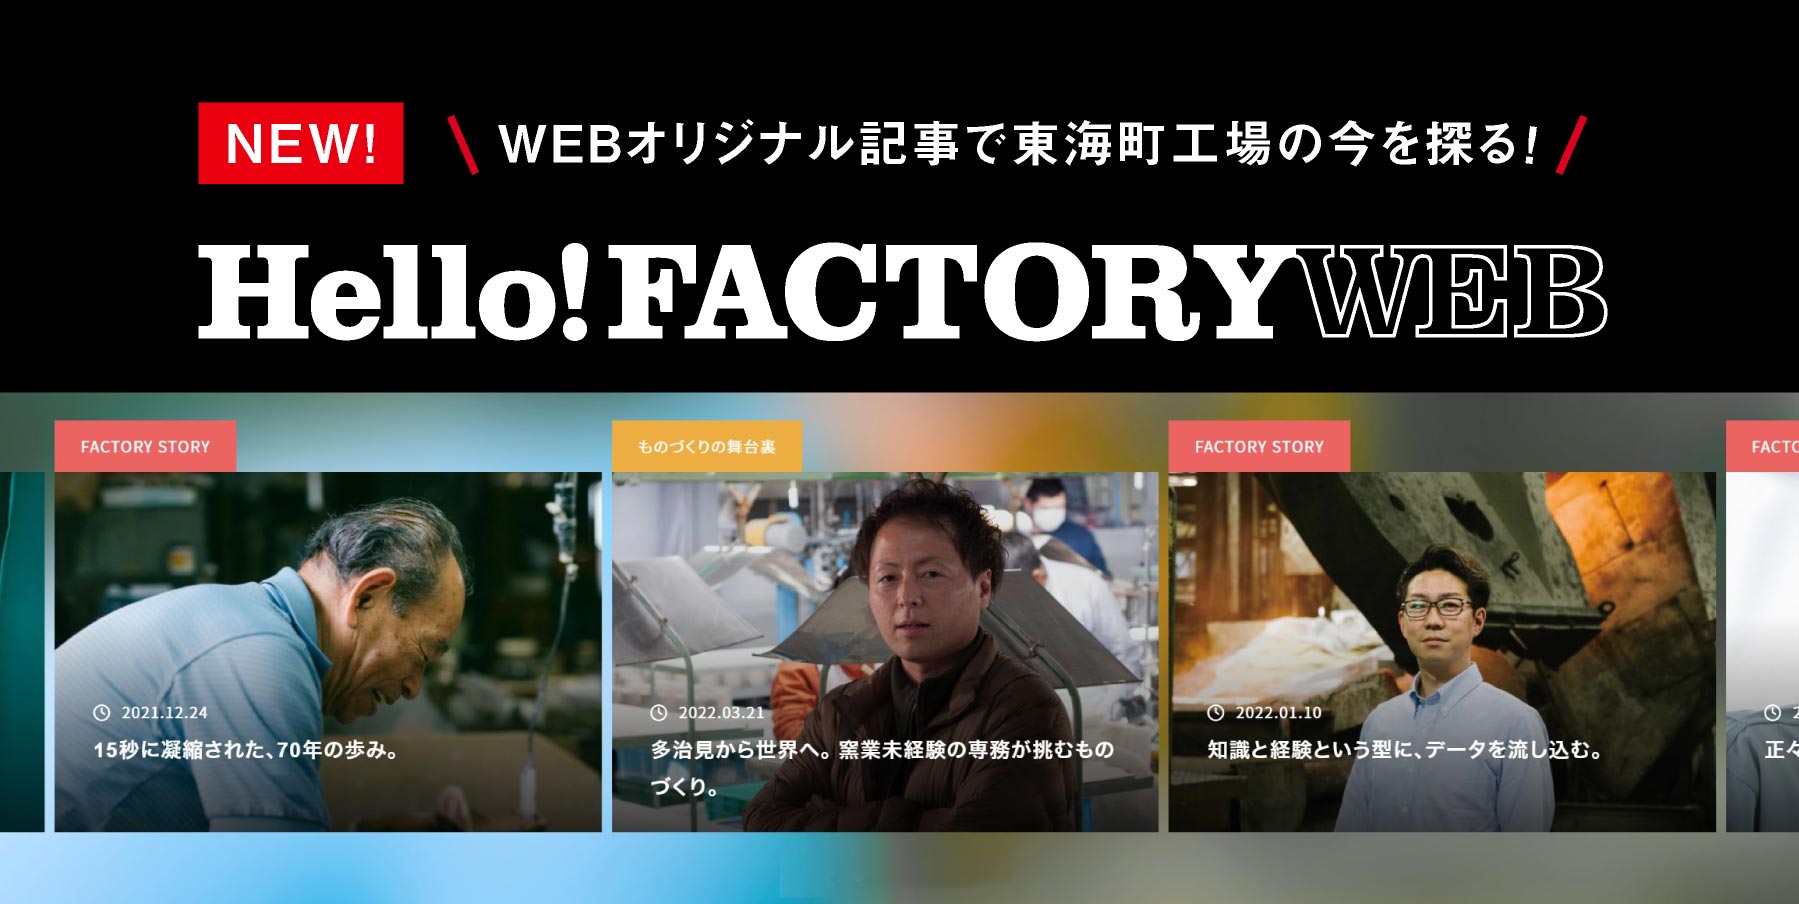 Hello! FACTORY WEB